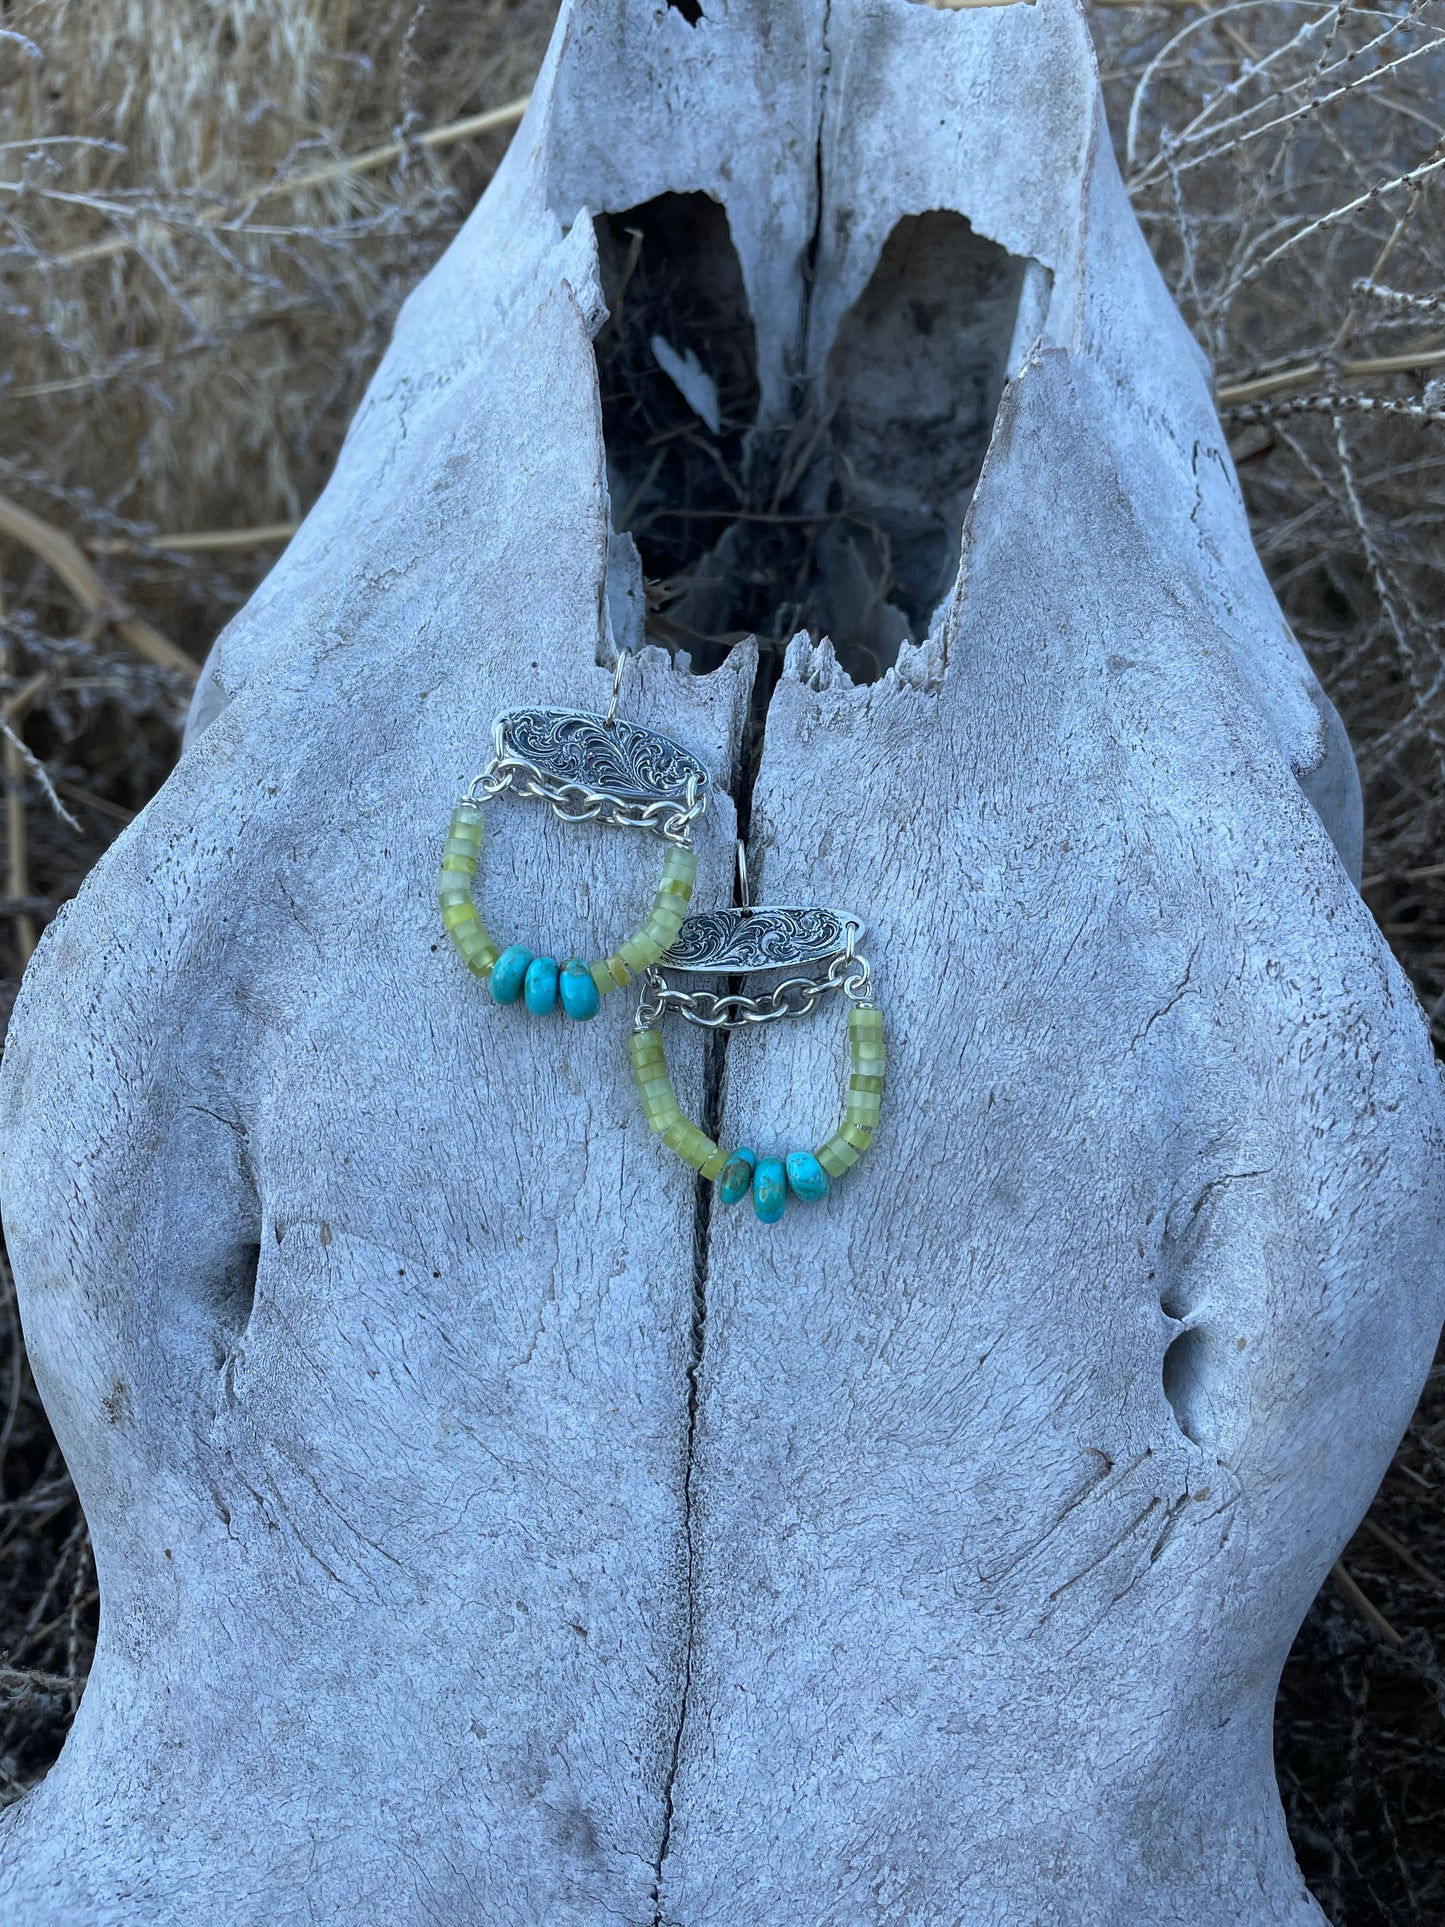 The Seneca Creek Earrings